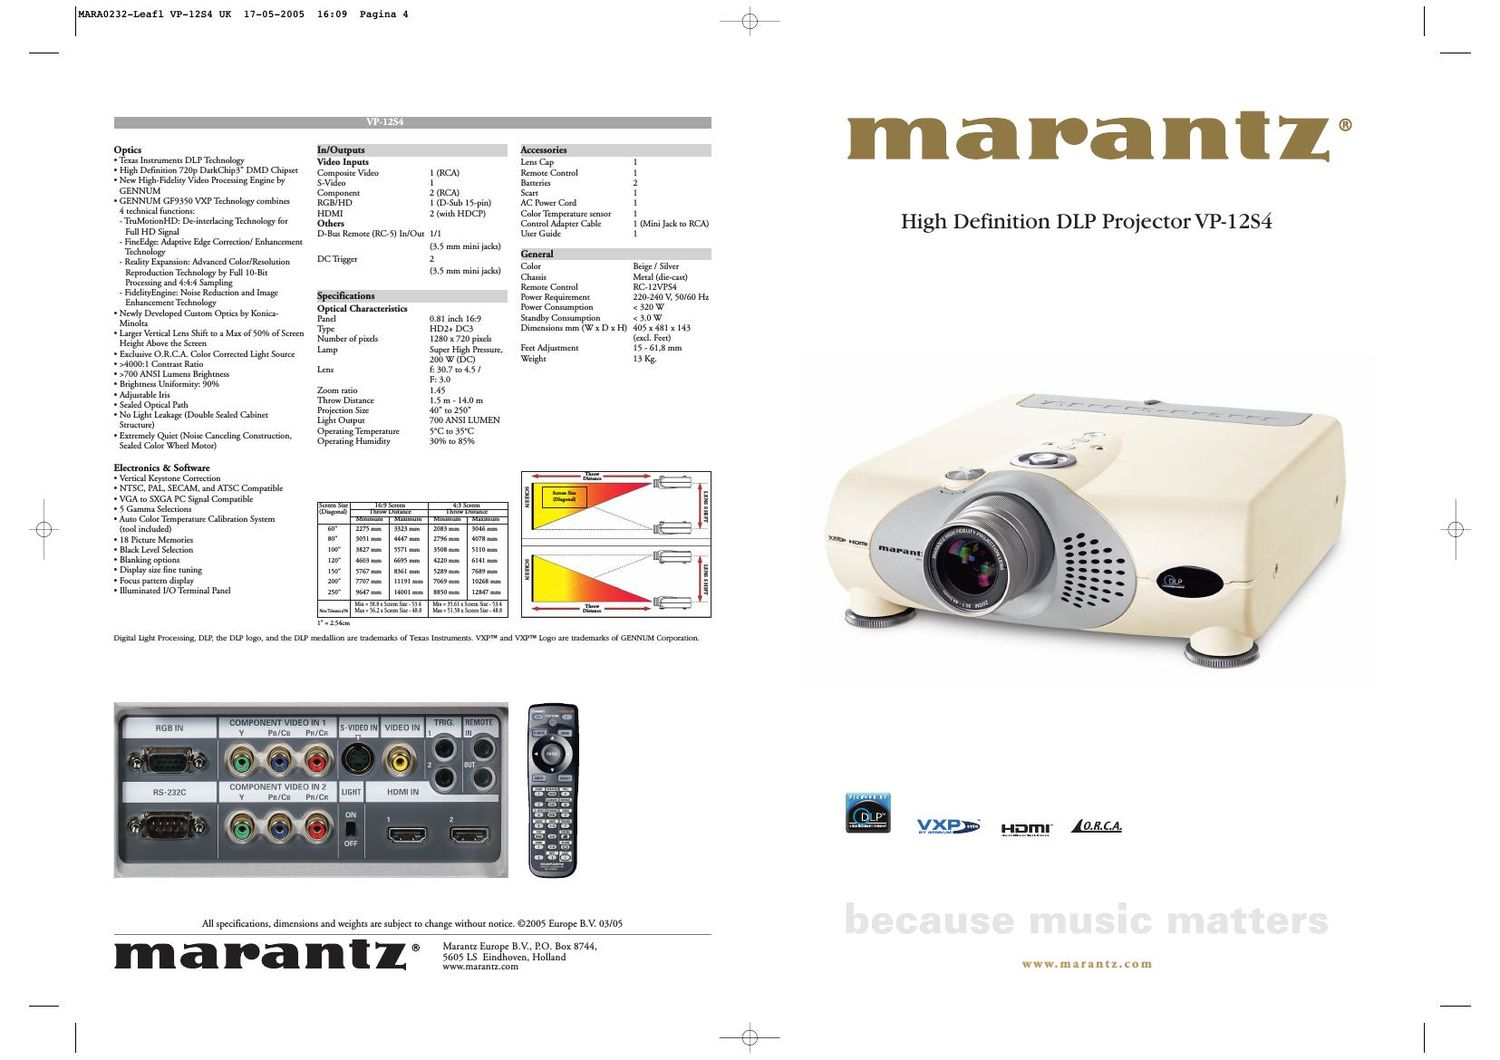 Marantz VP 12 S 4 Brochure